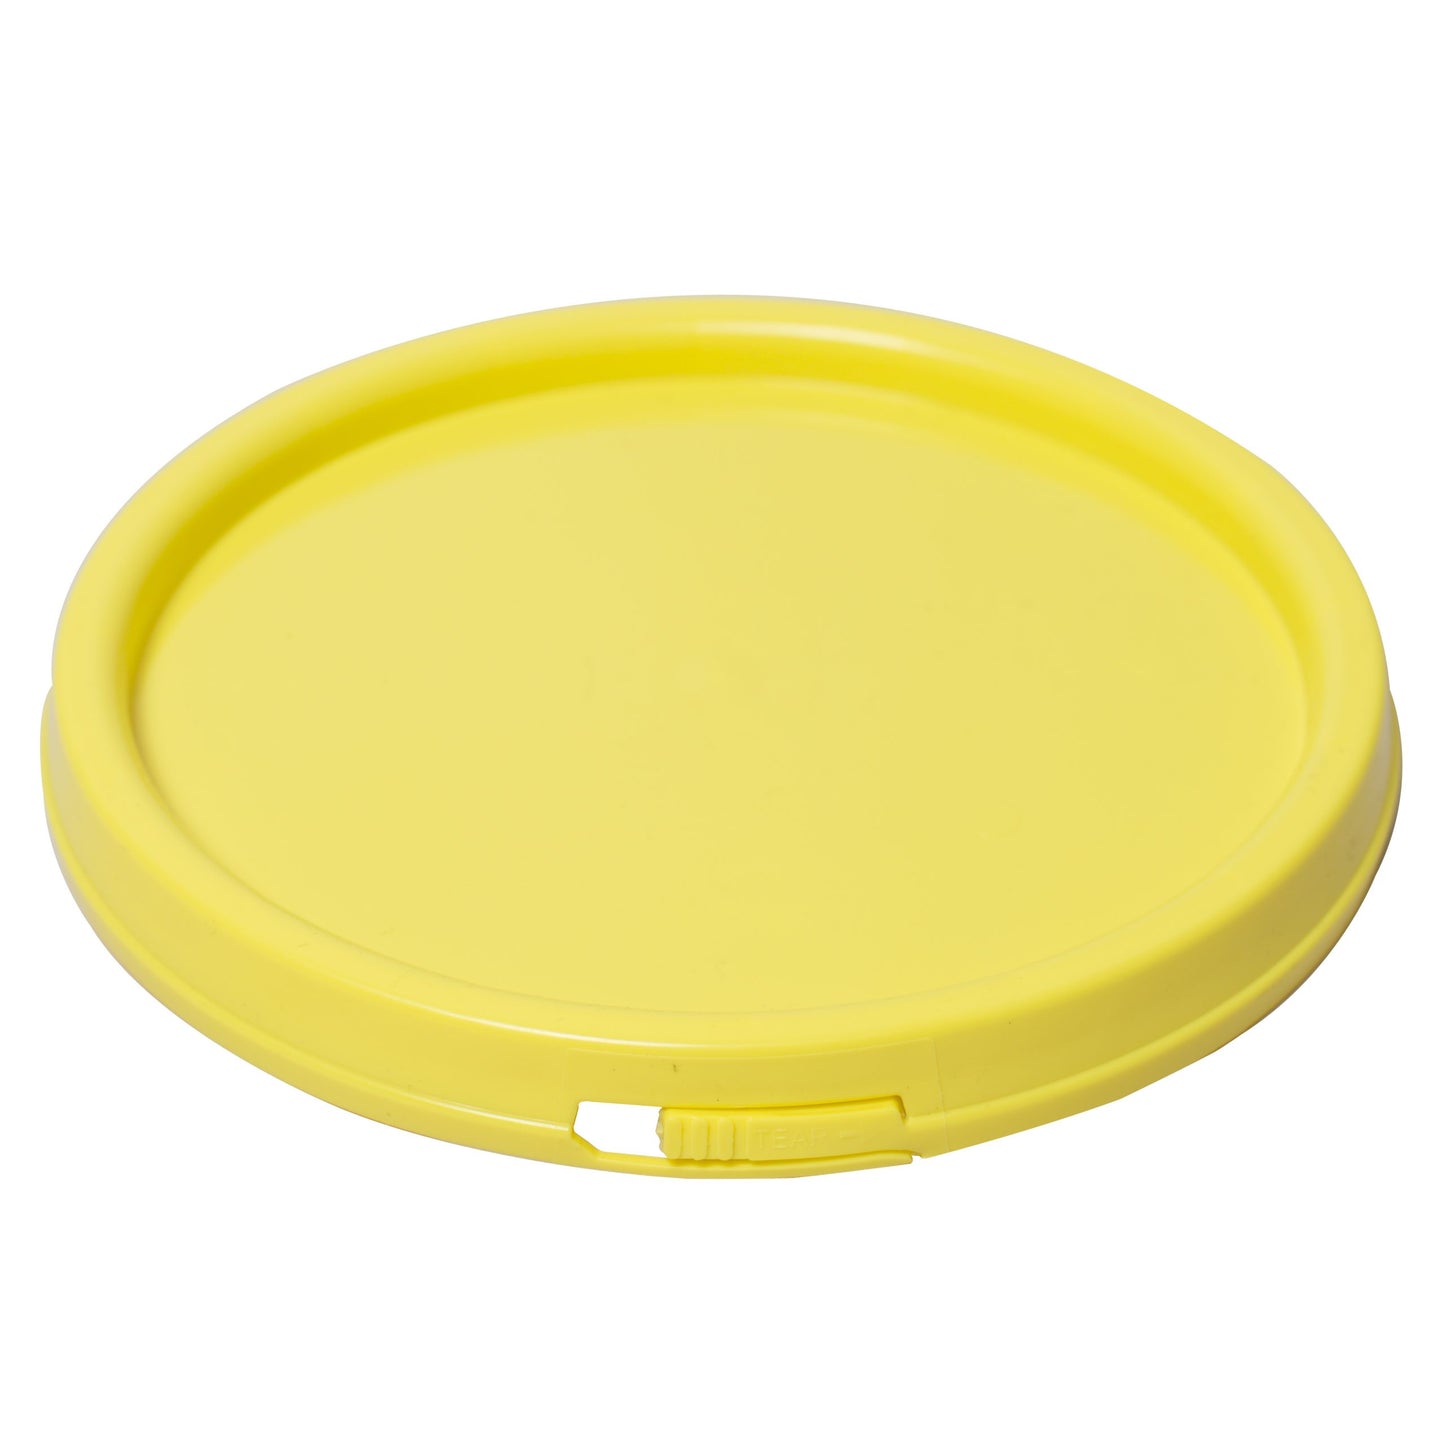 Honey Buckets - 3kg Pail Clear INCLUDE LID - Plastic Food Grade